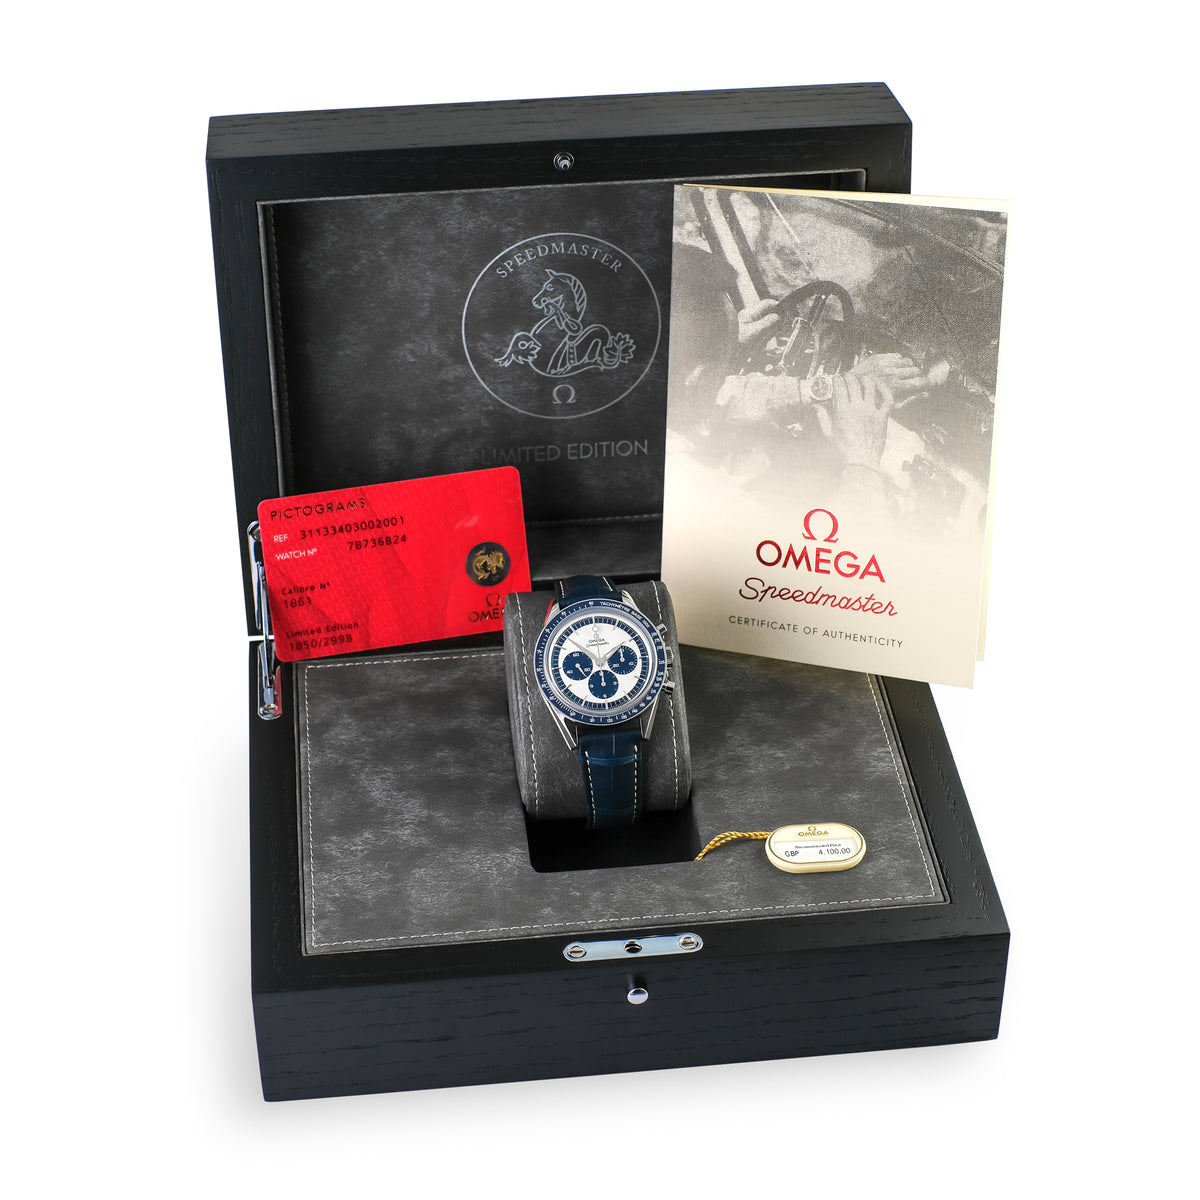 Omega Speedmaster Moonwatch CK2998